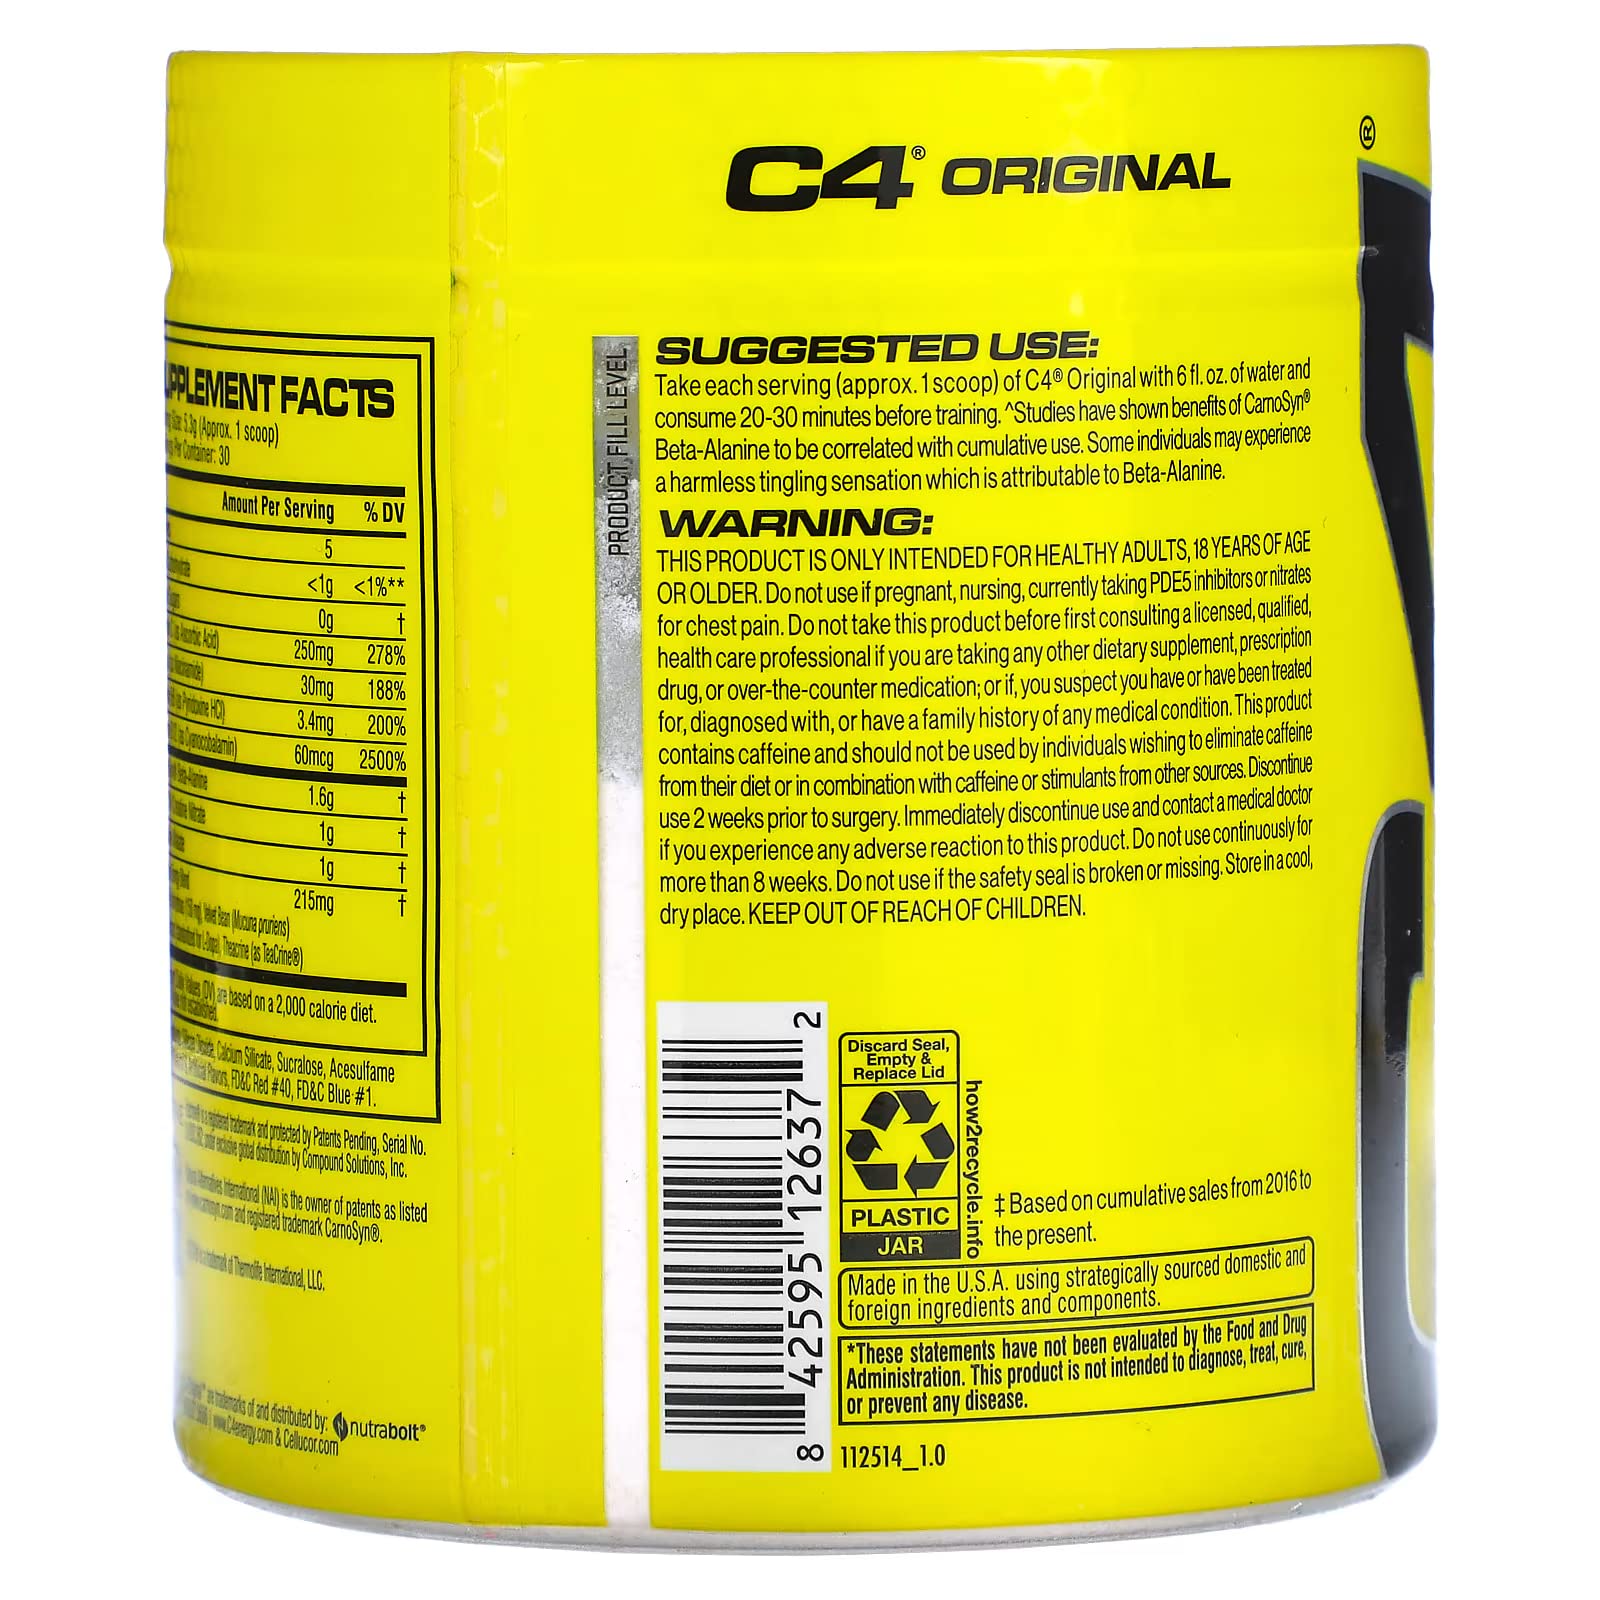 Cellucor C4 Original Pre Workout Powder Grape Sugar Free Preworkout Energy for Men & Women 150mg Caffeine + Beta Alanine + Creatine - 30 Servings (Packaging May Vary)